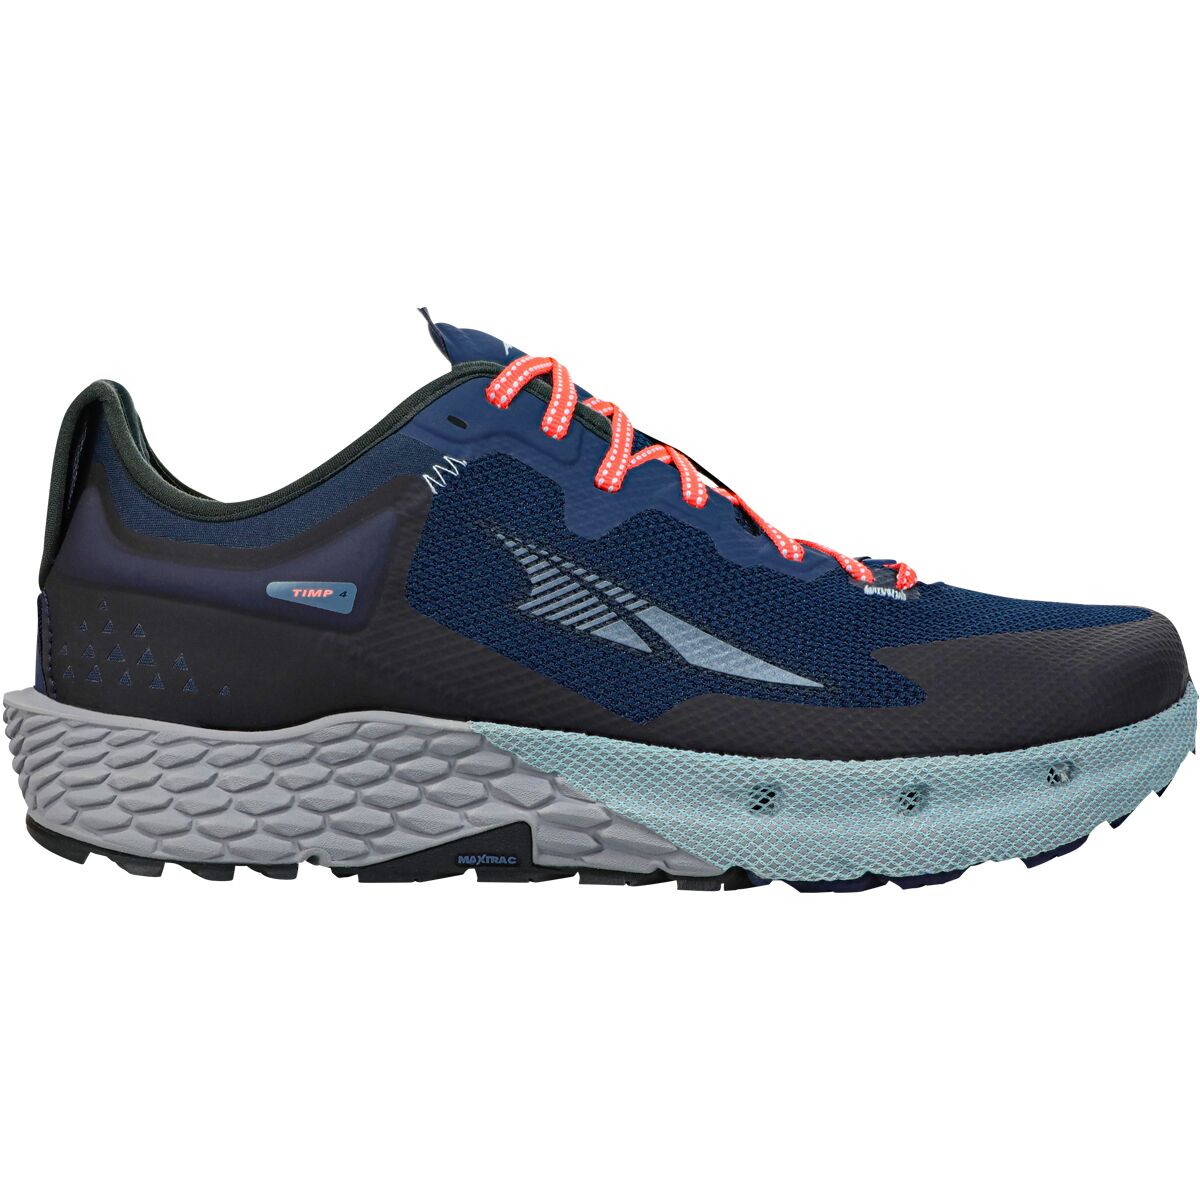 Altra Timp 4 Trail Running Shoe - Men's - Footwear